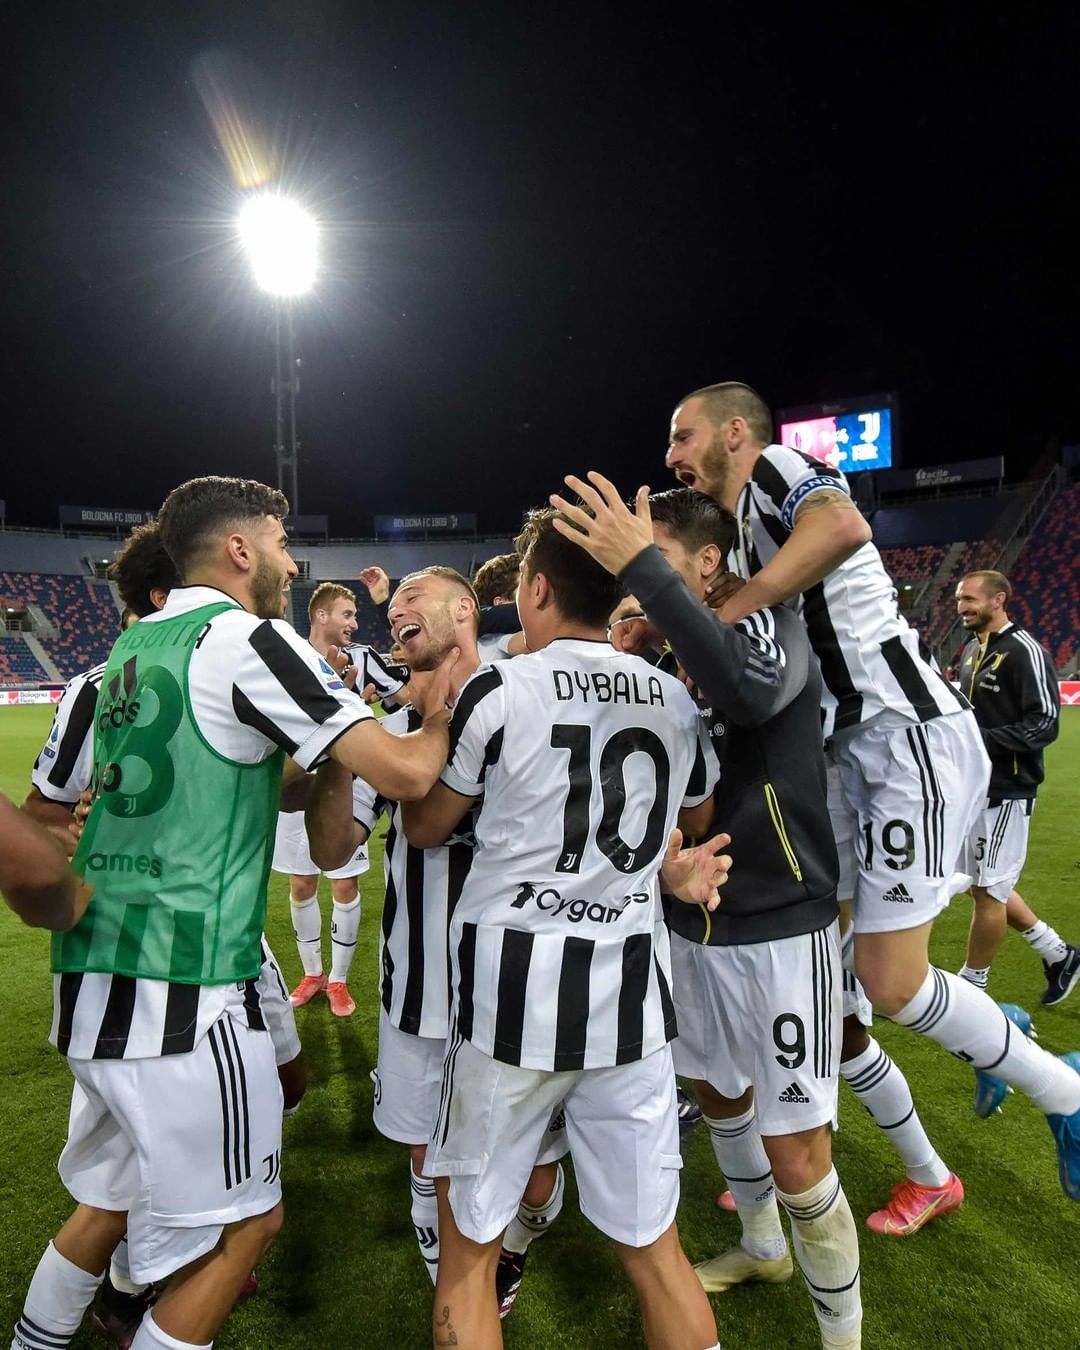 Tumbangkan Tuan Rumah Bologna, Juventus Sukses Amankan Tiket Liga Champions  Musim Depan - Haloyouth